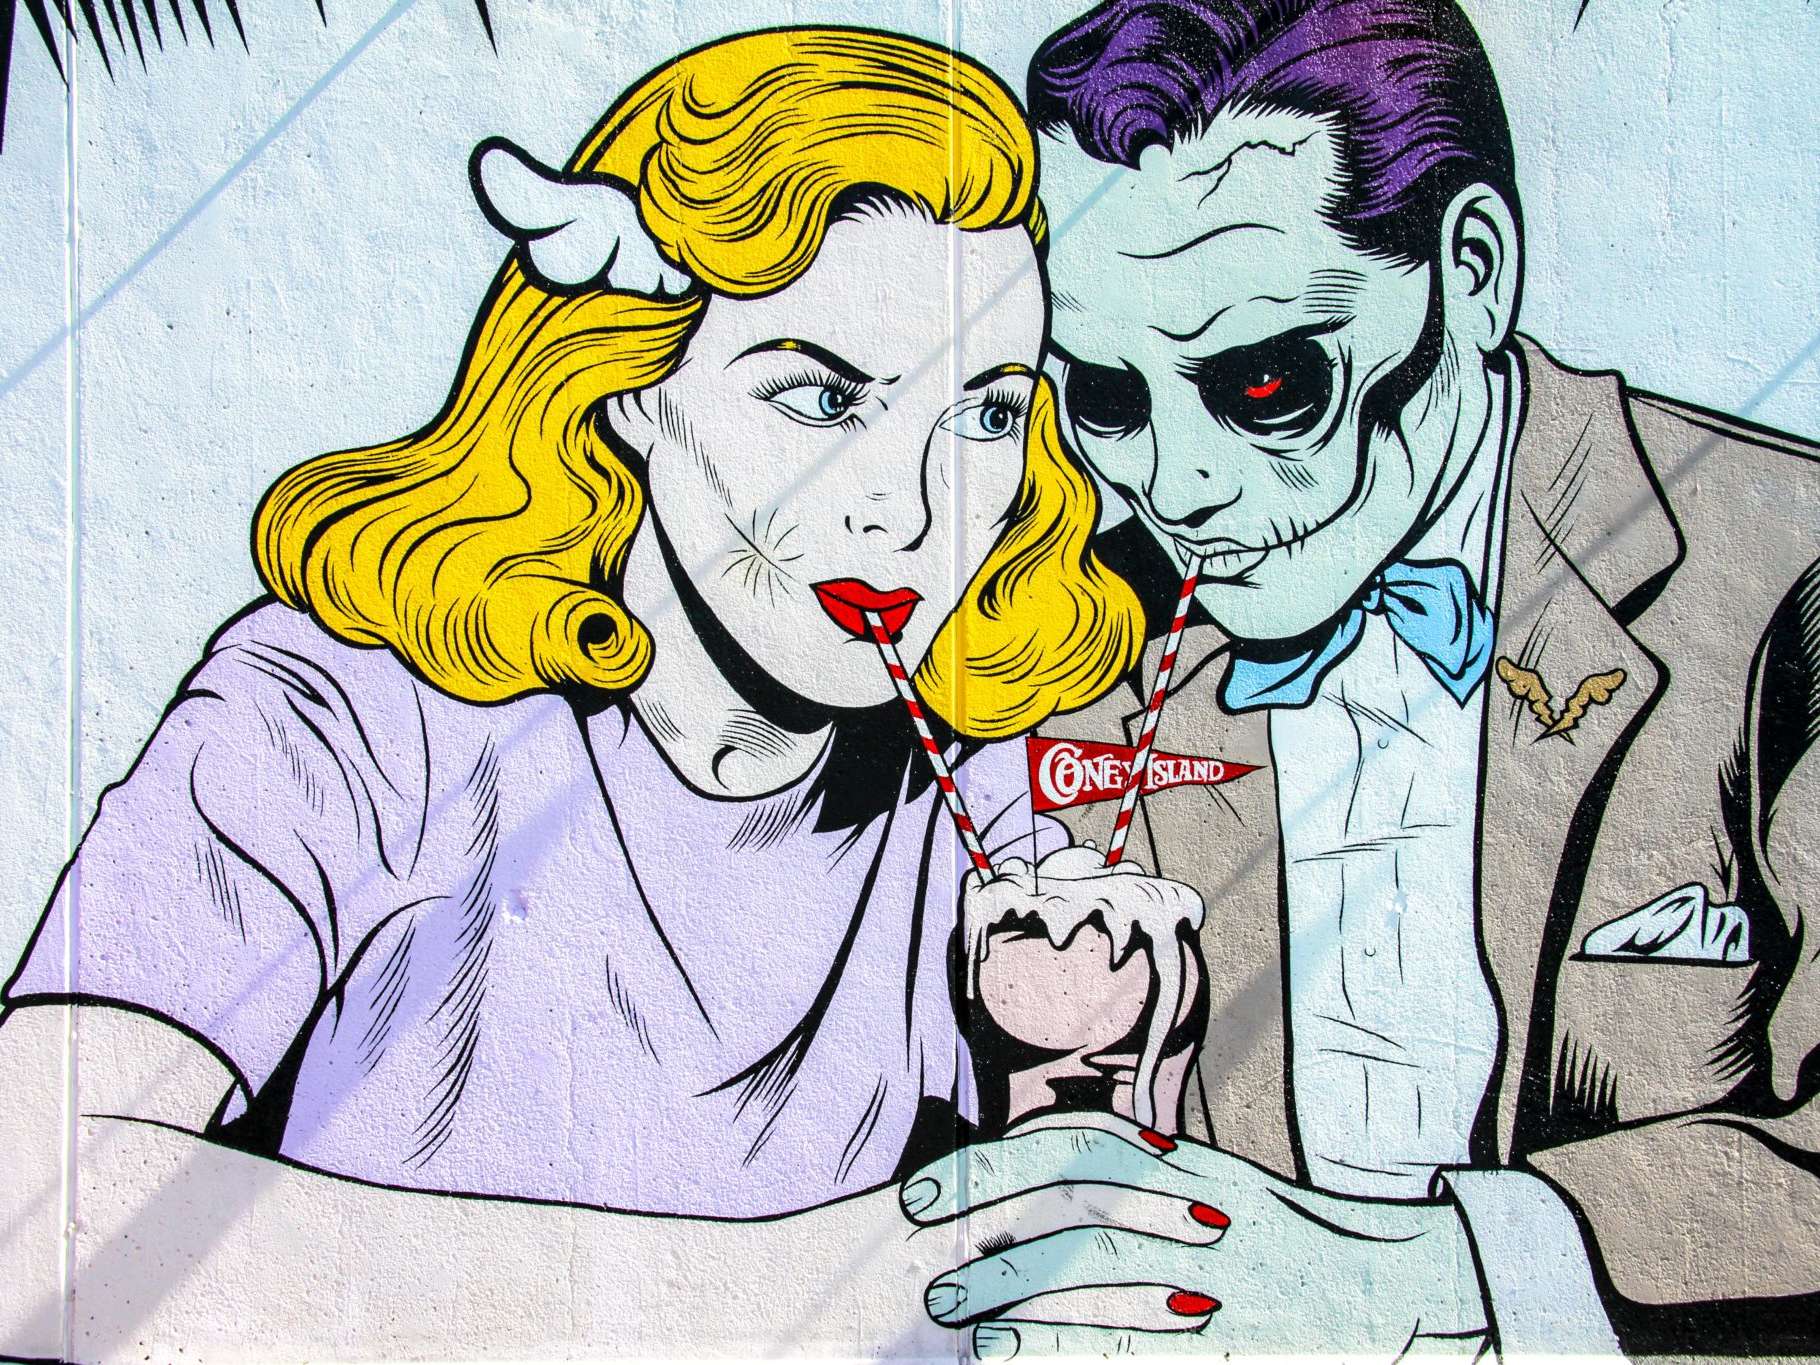 A comic book style man and woman sharing a milkshake